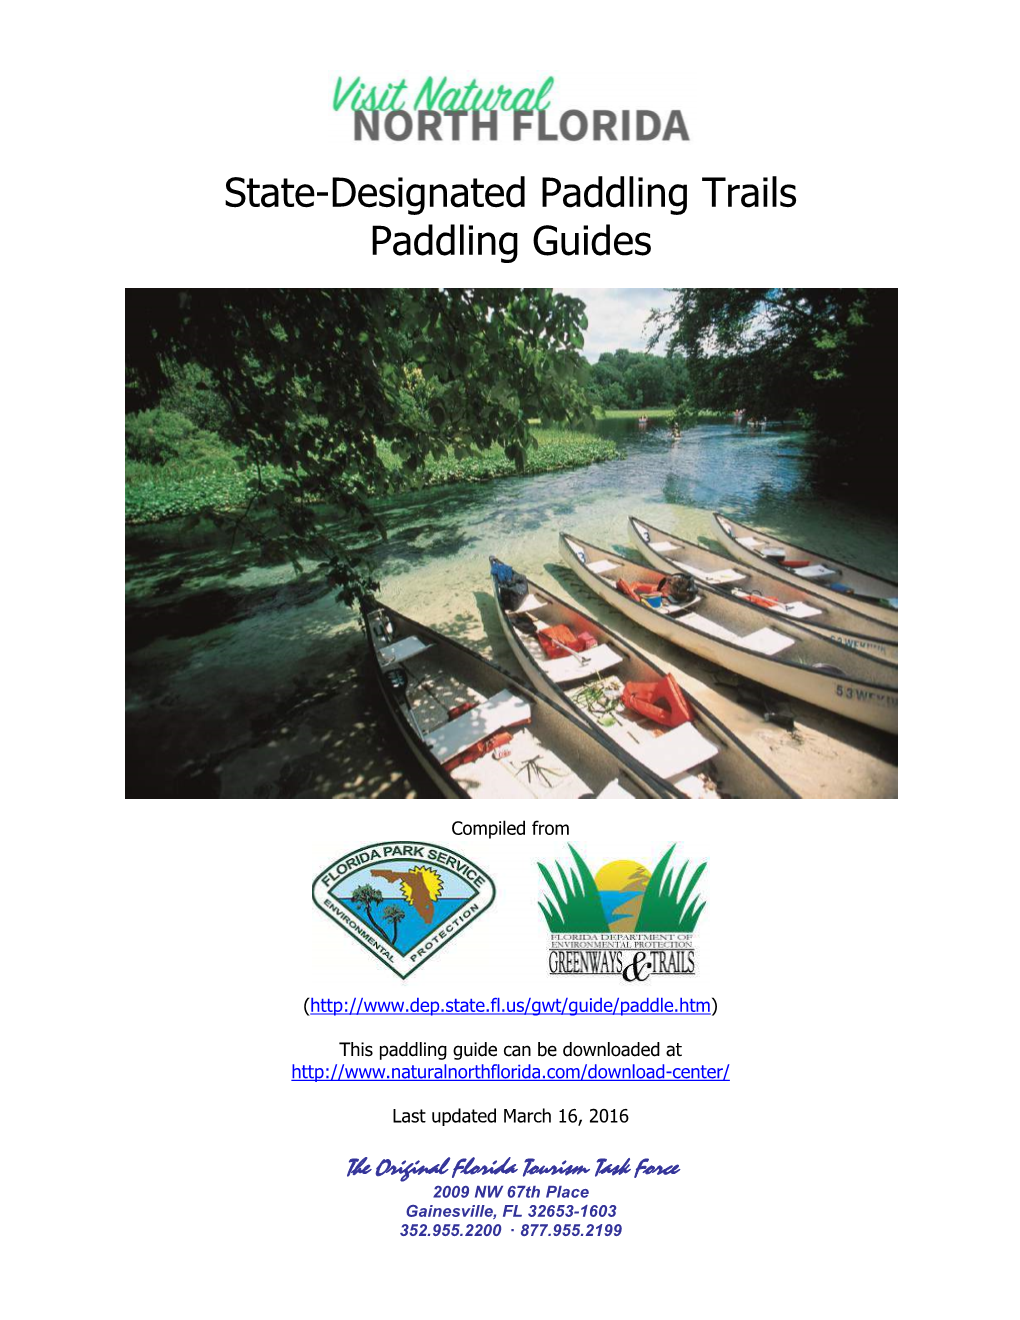 State-Designated Paddling Trails Paddling Guides